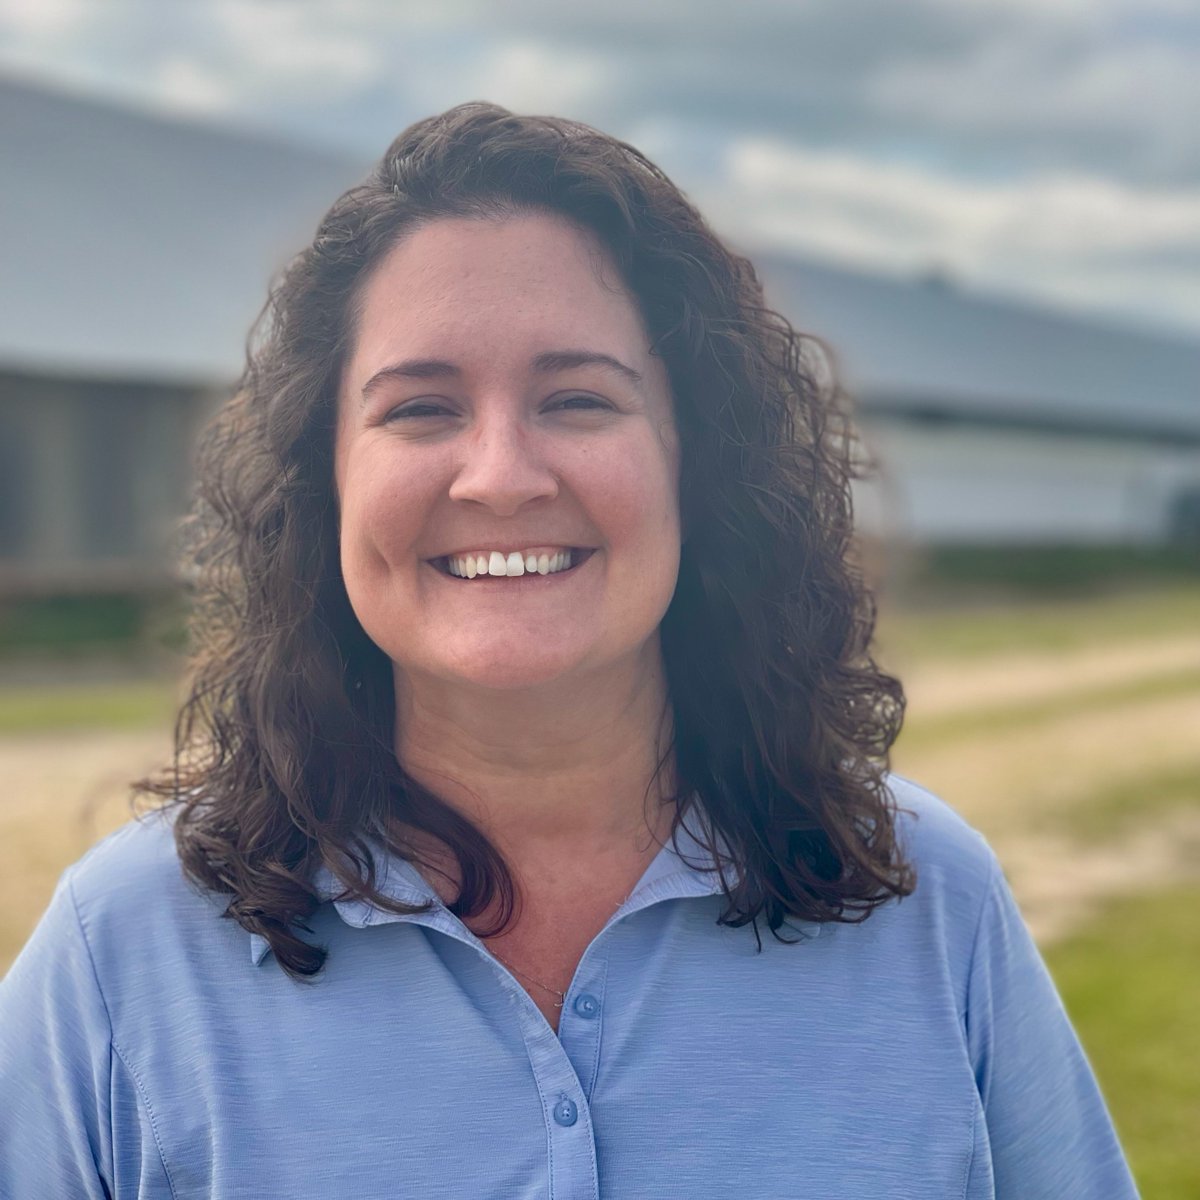 In celebration of #WomensHistoryMonth, meet Kasee Mann, Area Breeder Manager for Wayne-Sanderson Farms in South Alabama. Click here to read her story: wayne-sanderson.com/3VnJkG1. #WomenInAg #MakingChickenAmazing